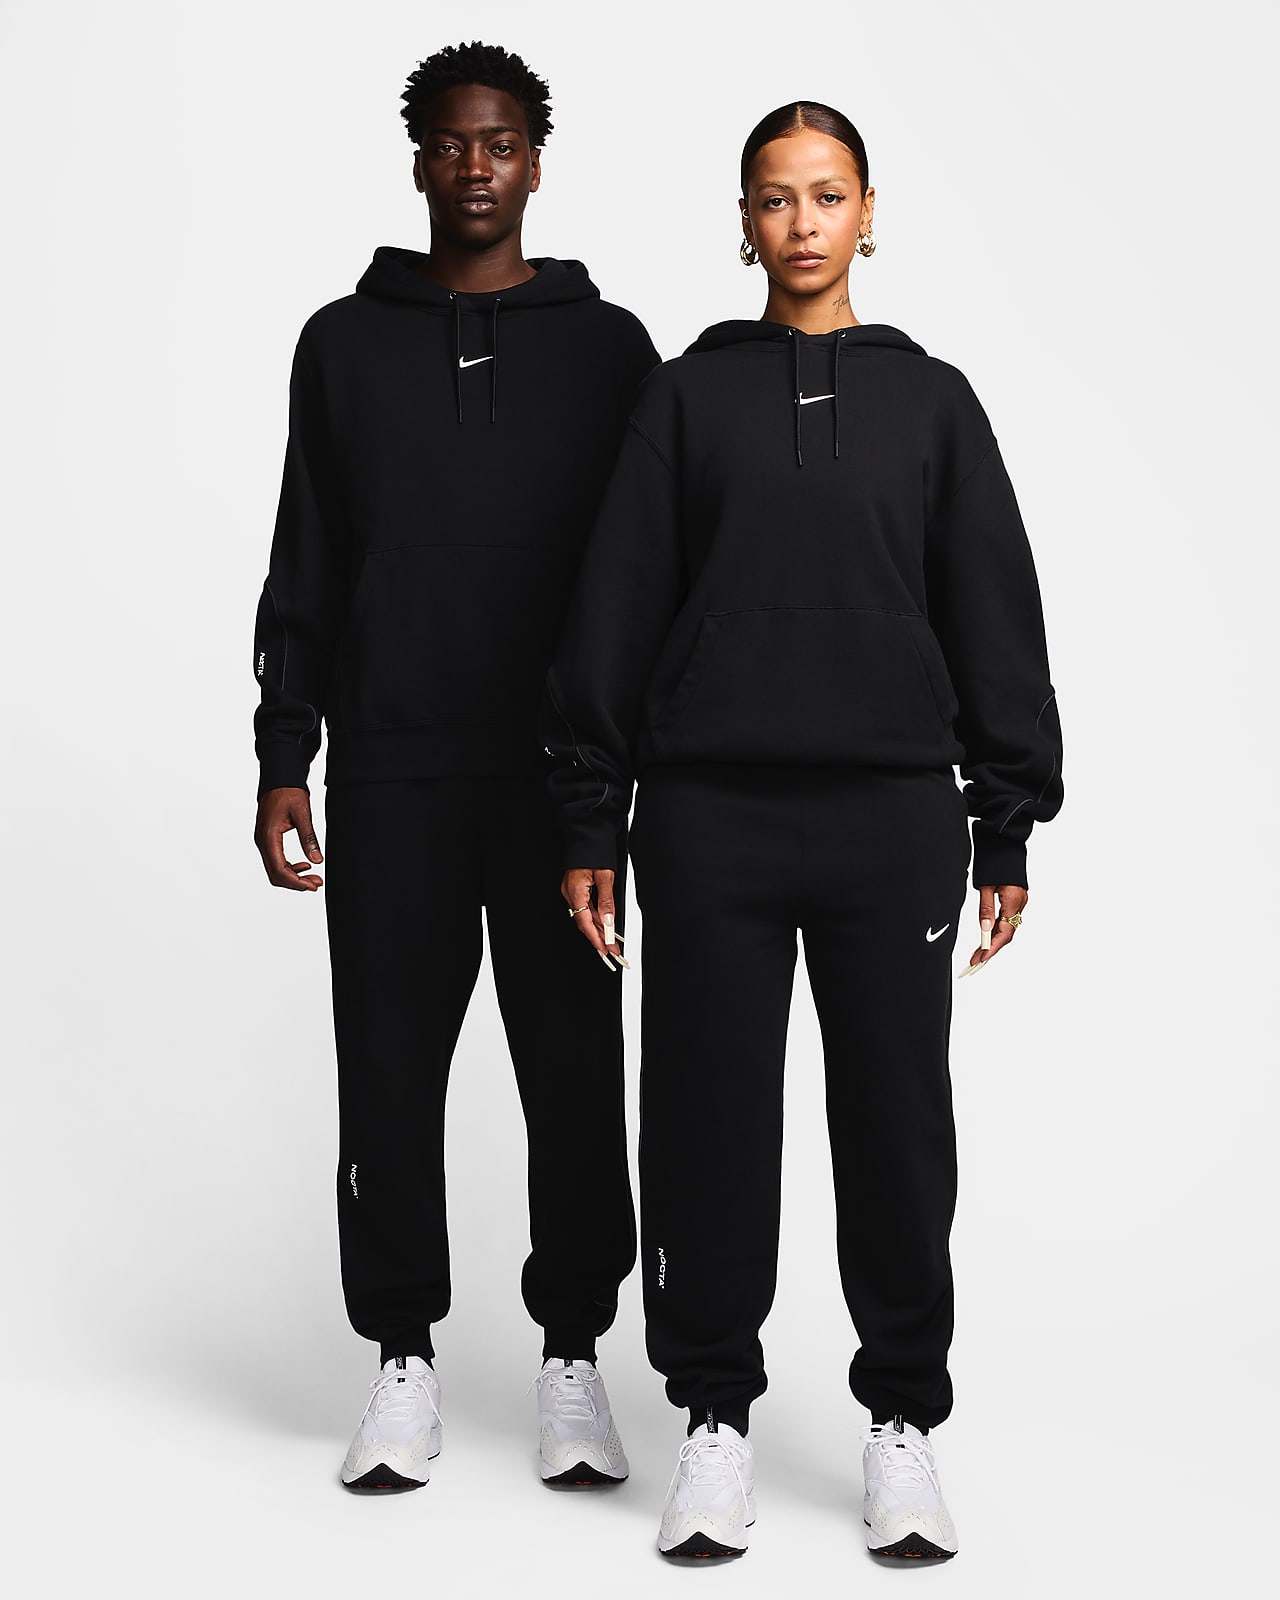 Très Bien - Nike NOCTA Tech Fleece Pants Black / University Gold